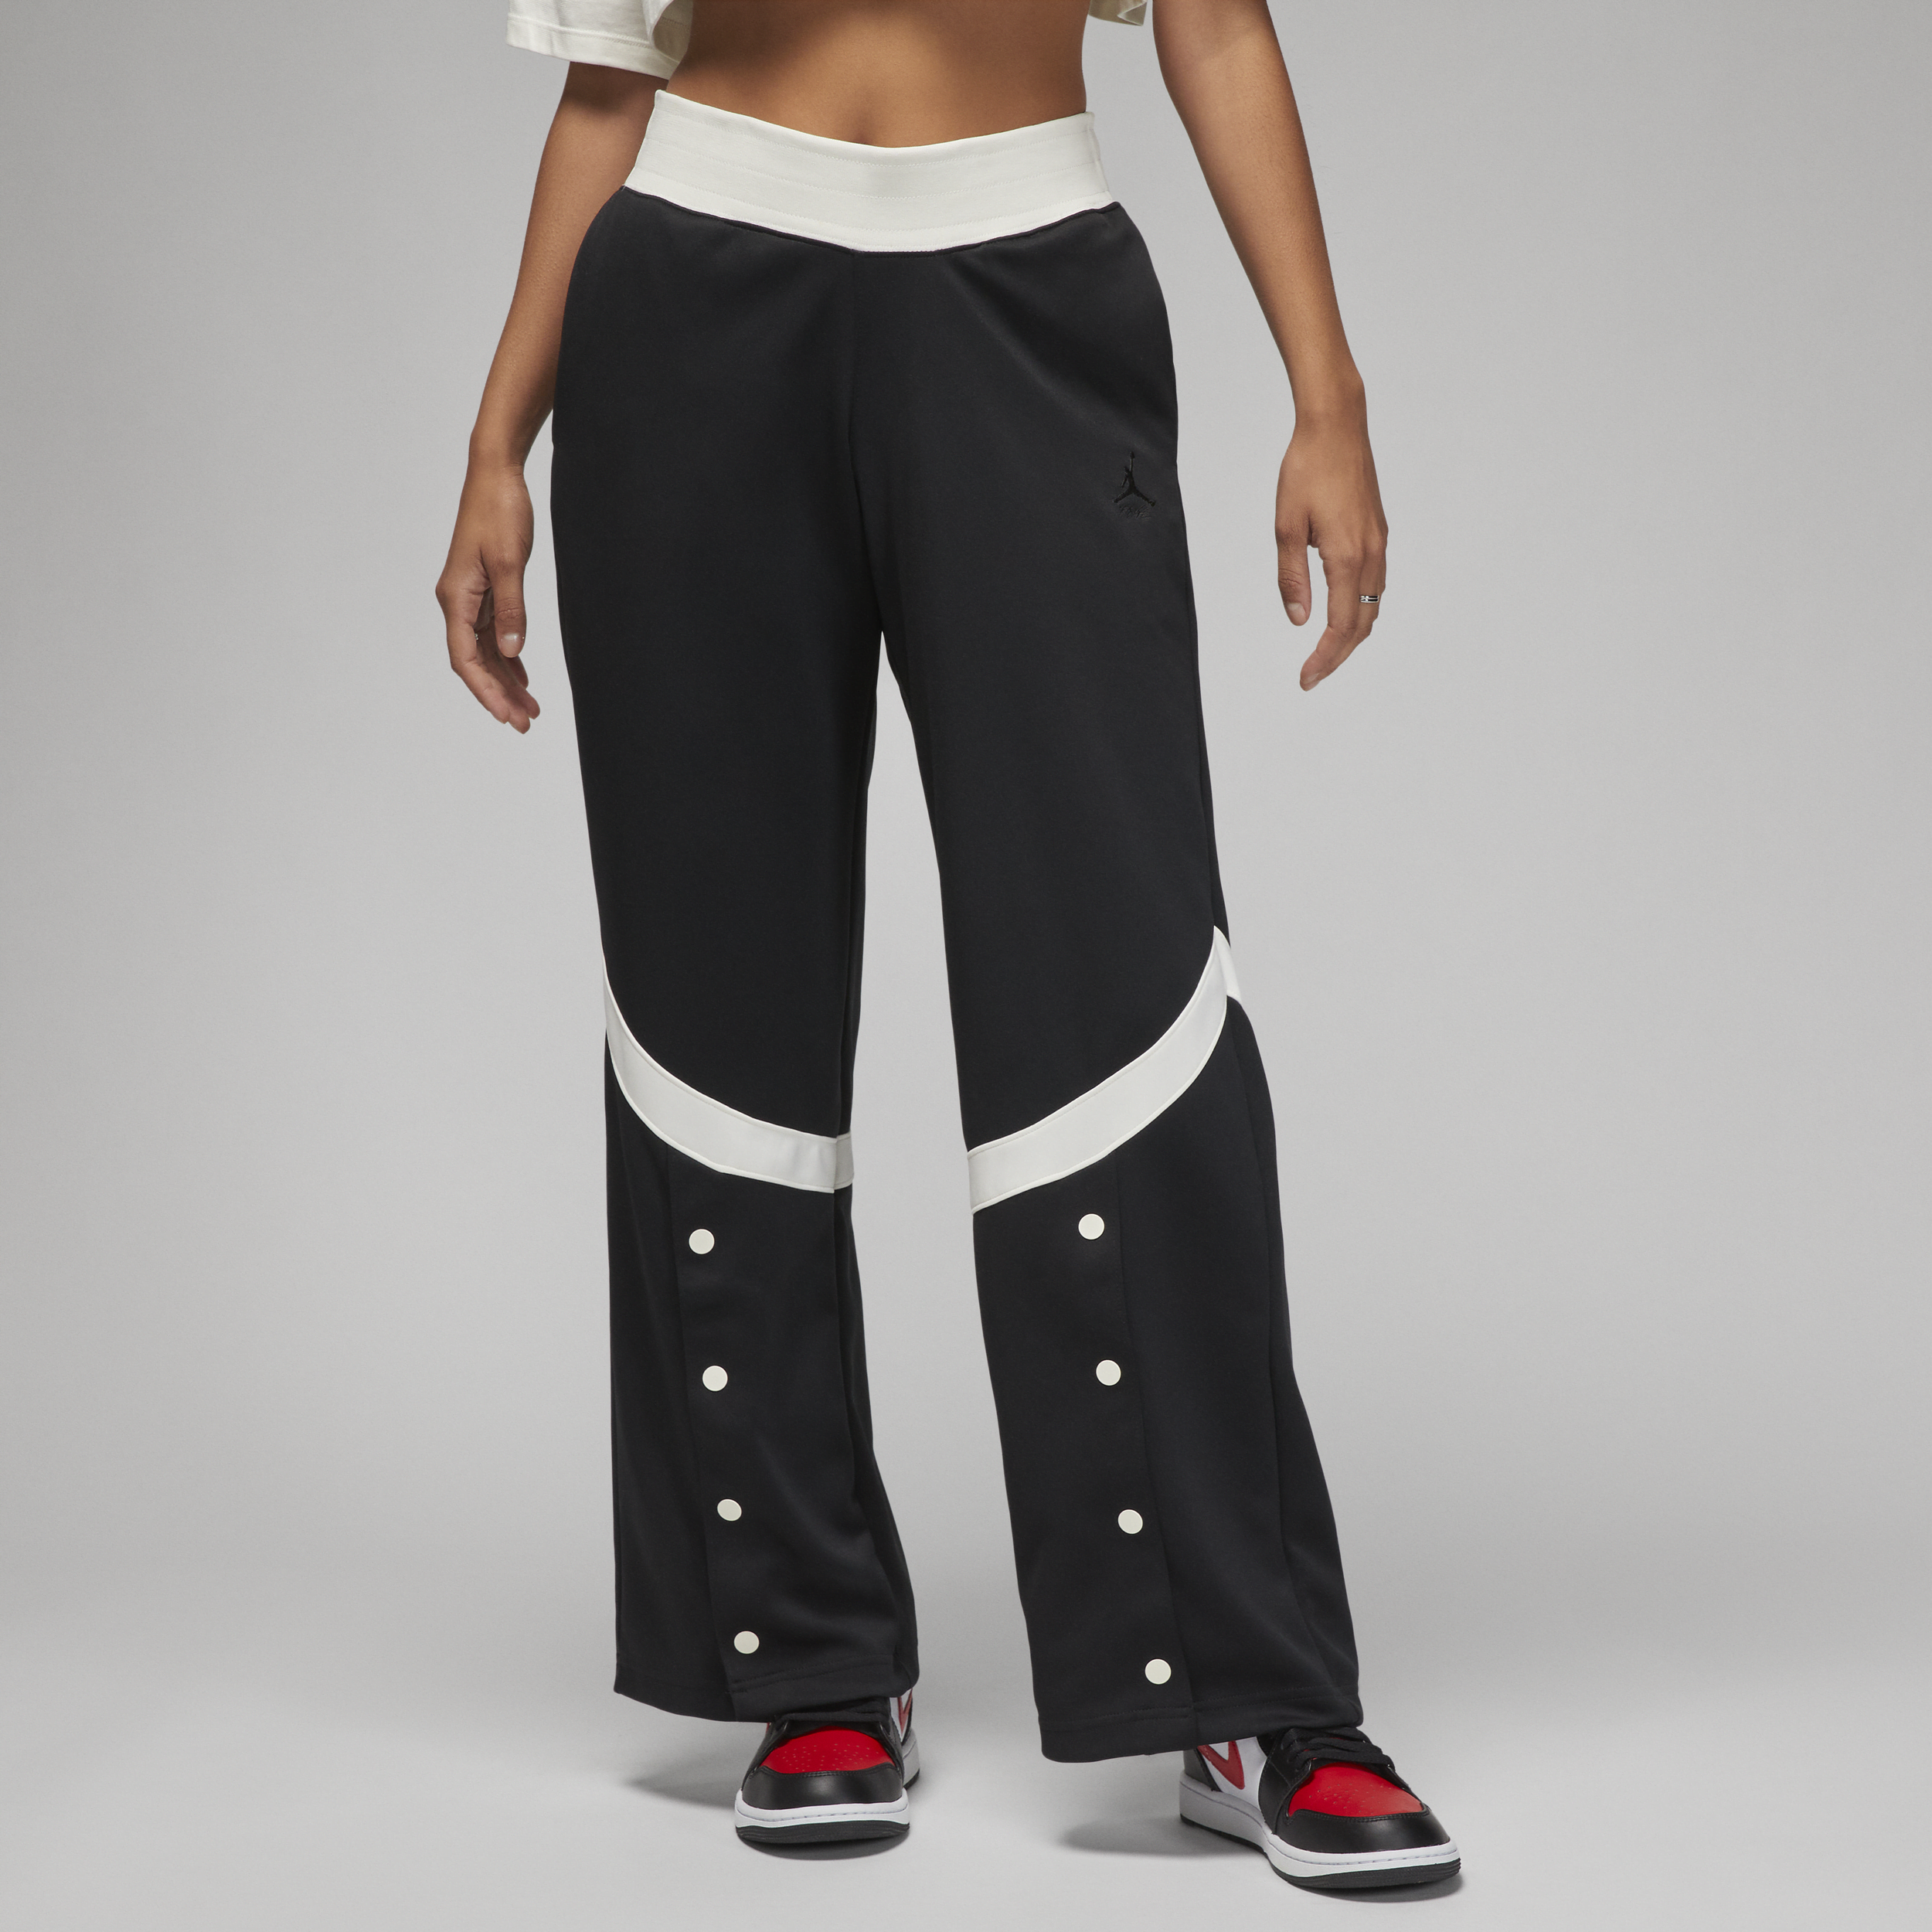 Nike Pantaloni Jordan (Her)itage – Donna - Nero